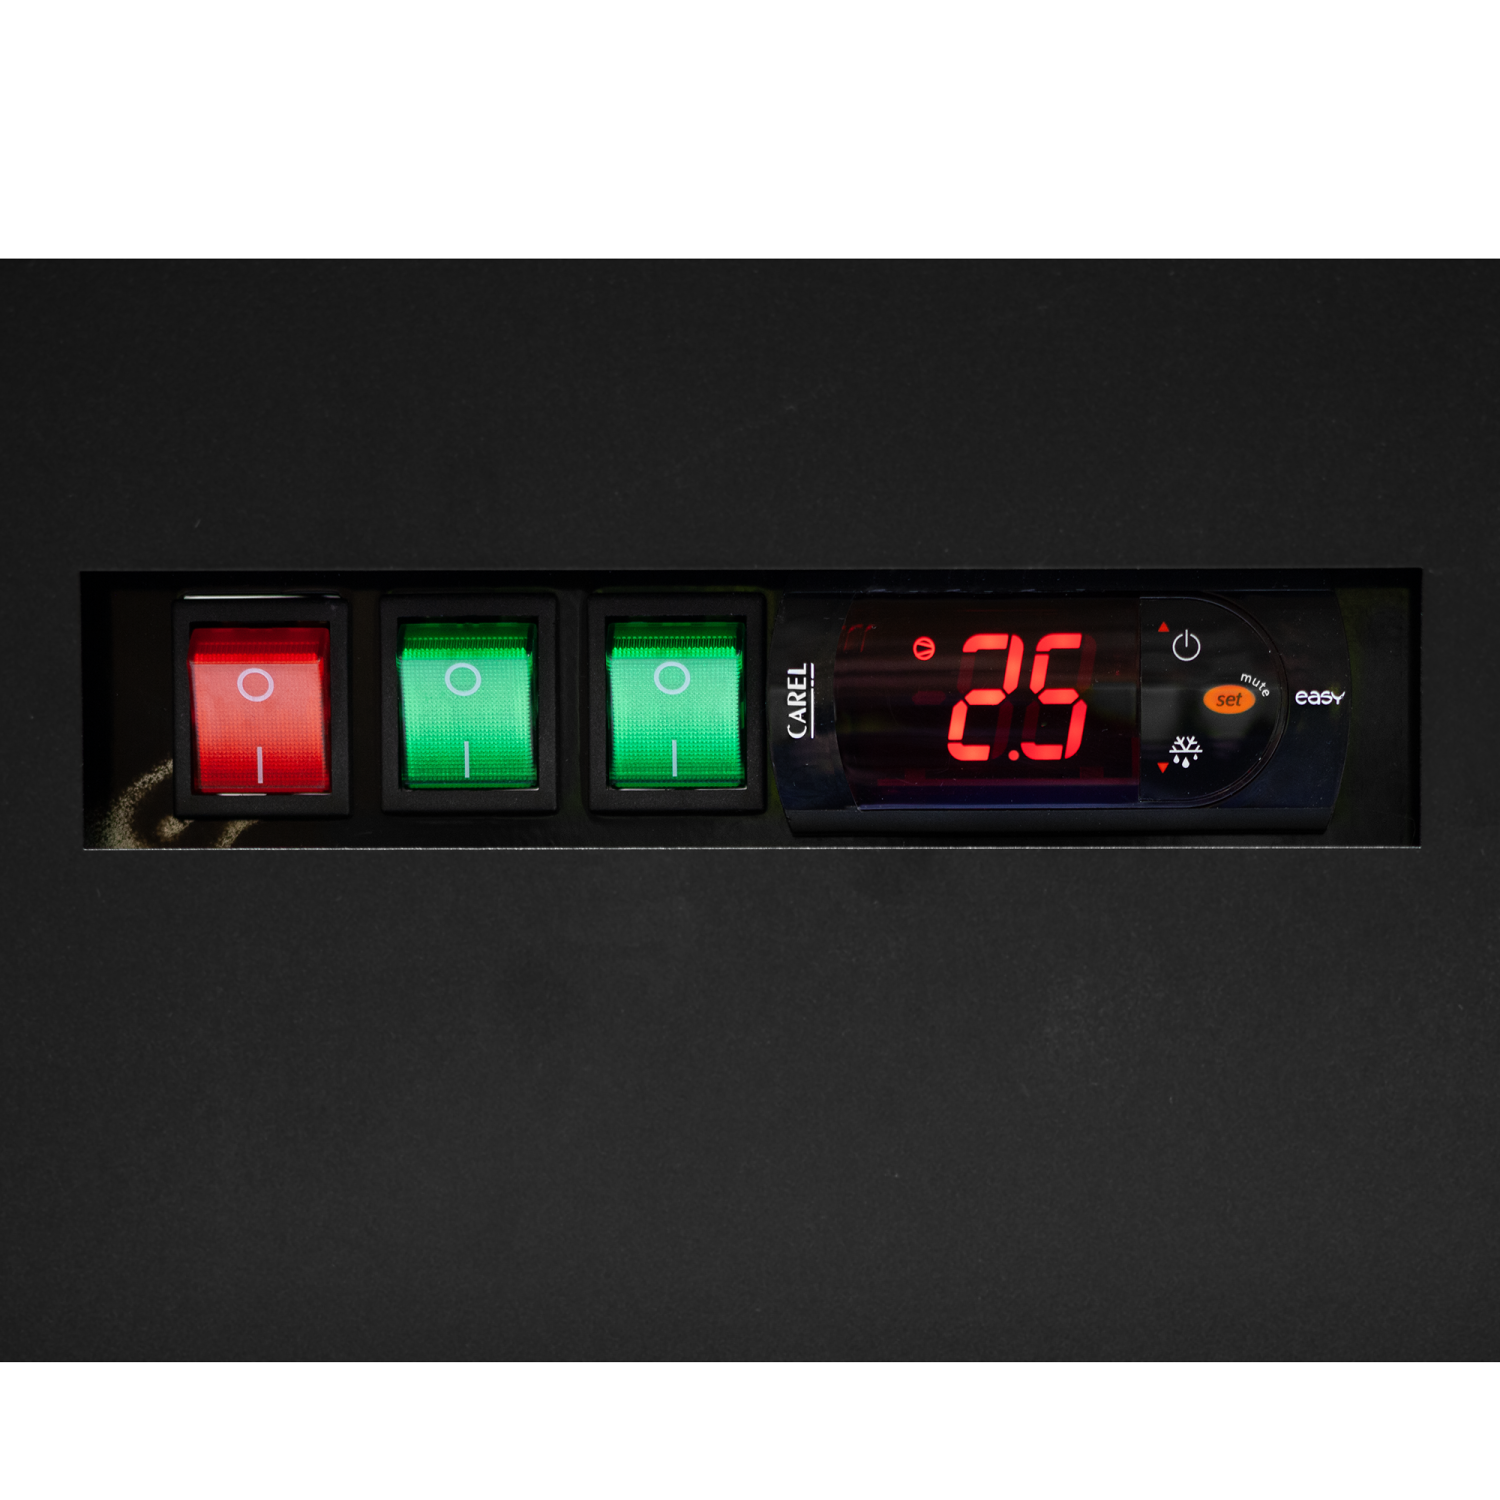 Digital Controller and Temperature Display